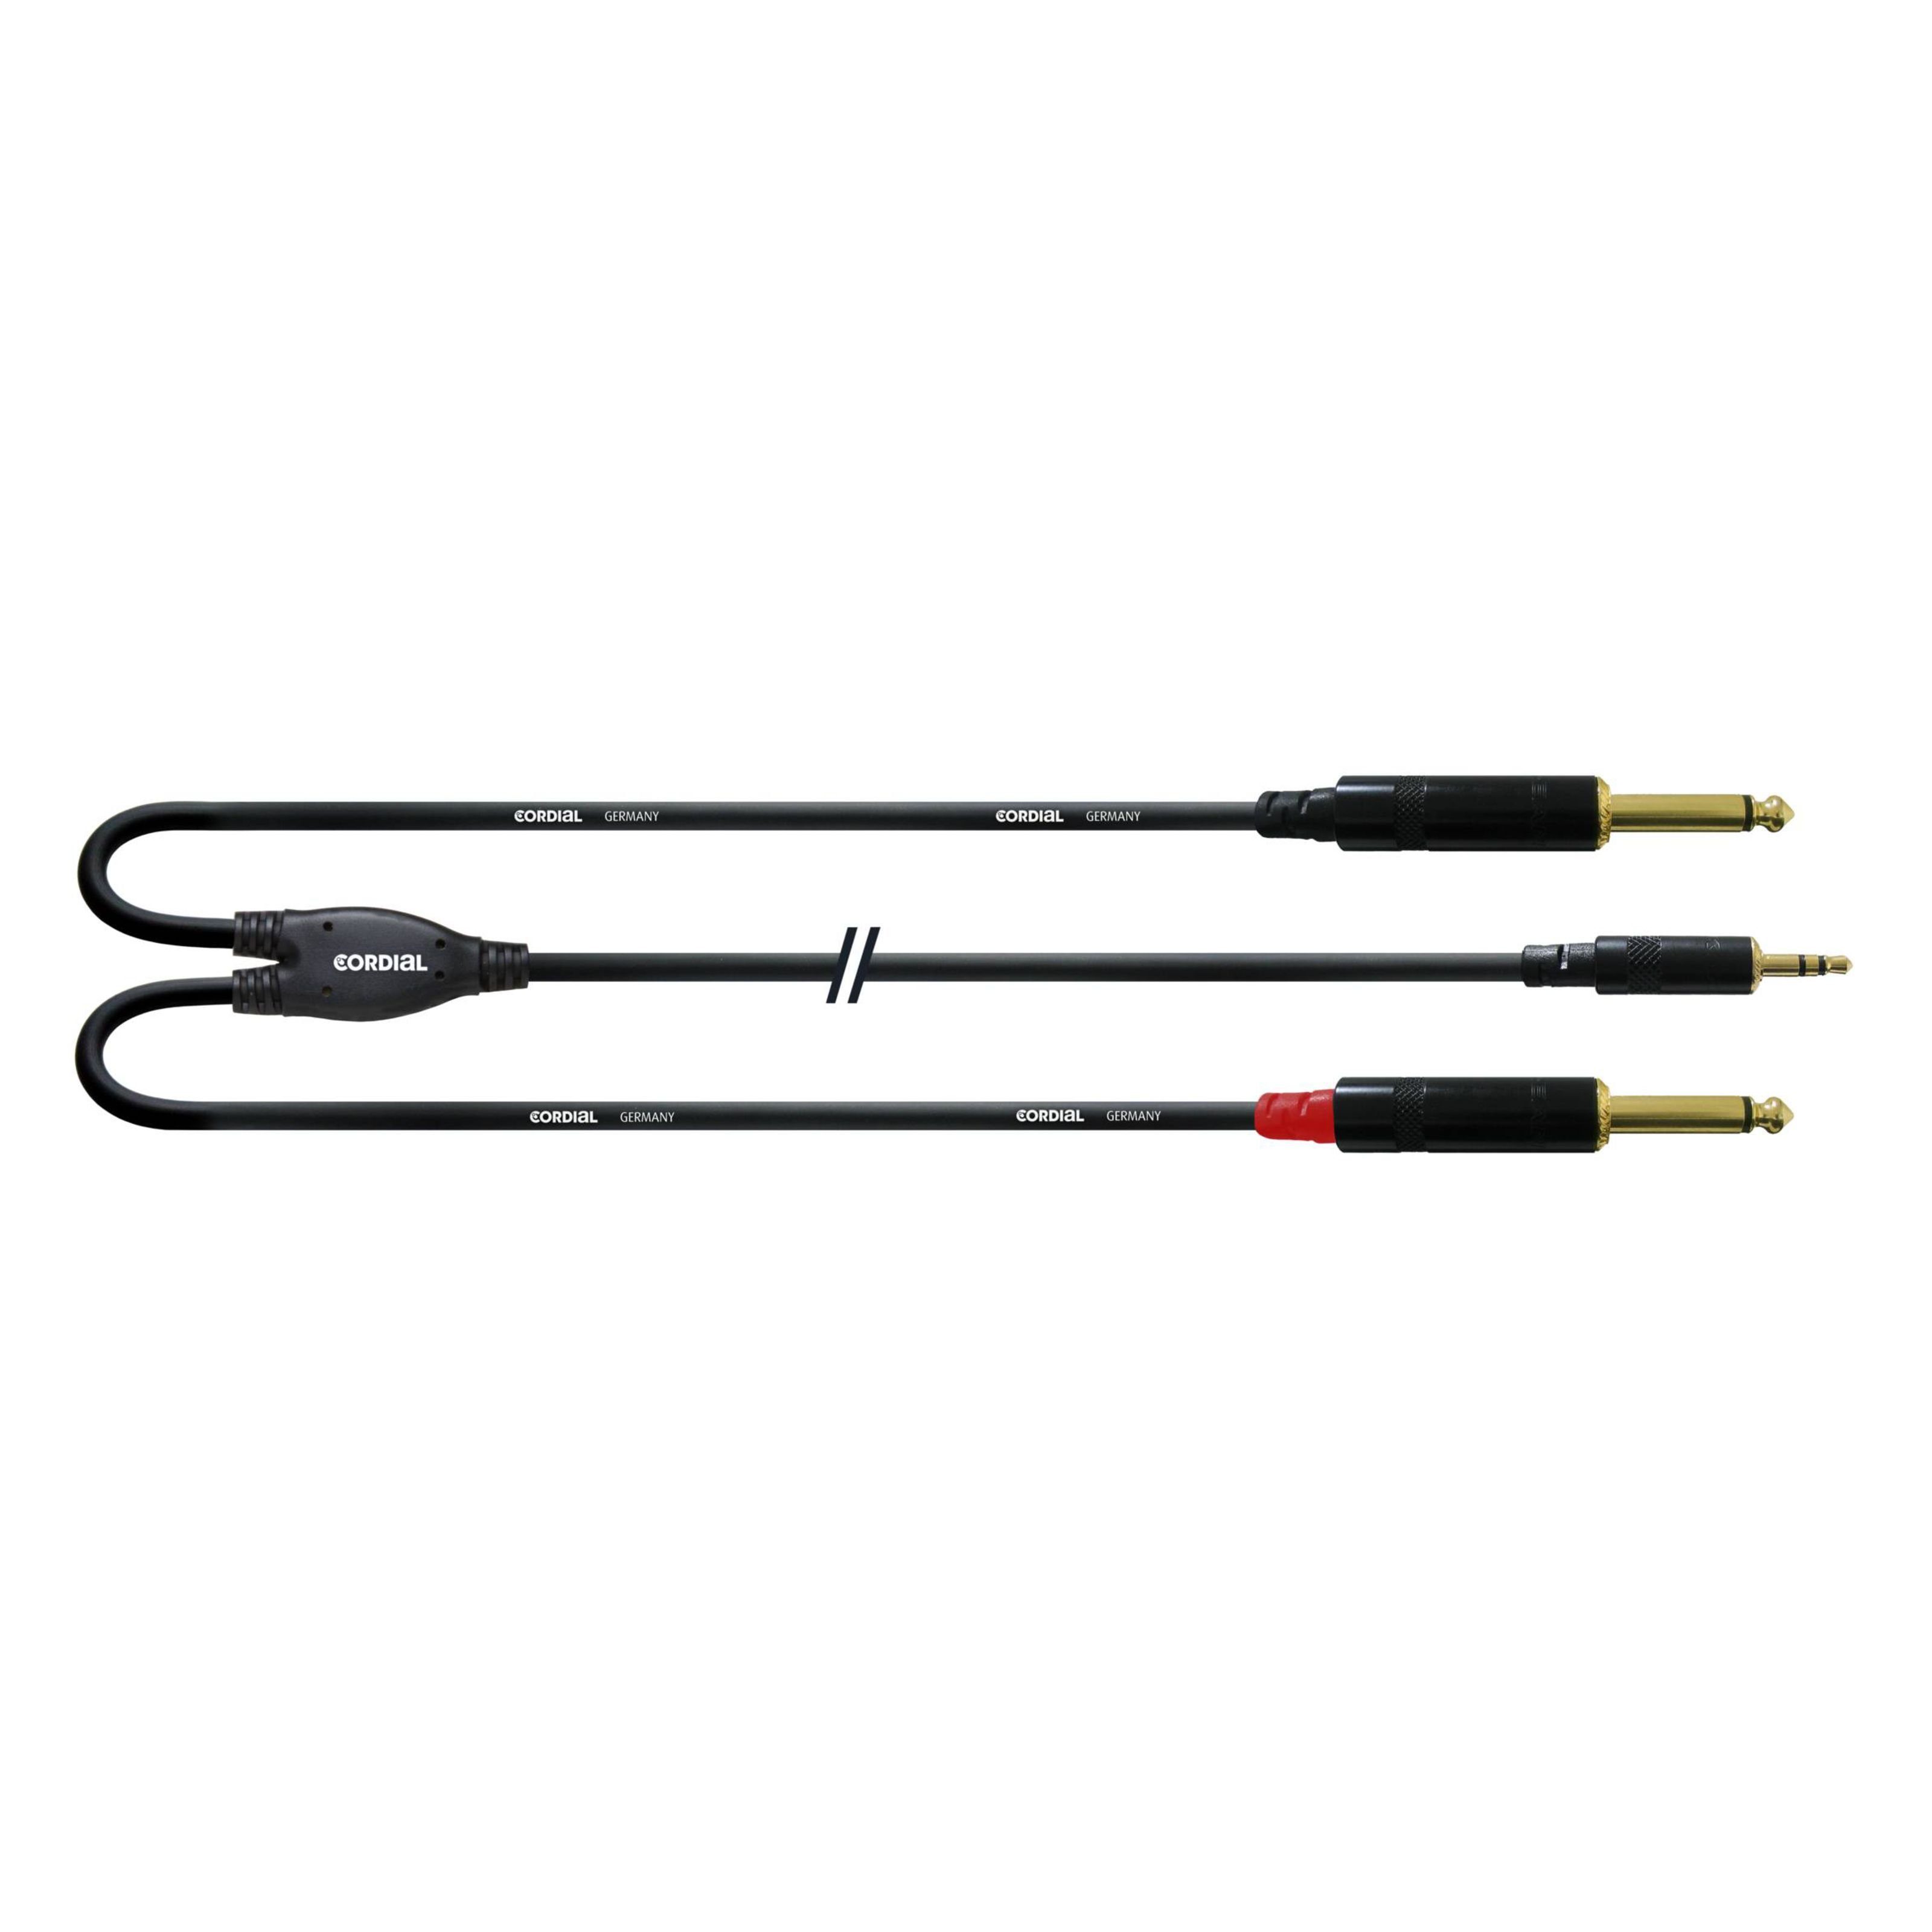 m Klinke 0.9 0,9 Rean Stecker Y-Audio-Kabel Insertkabel CFY - WPP Cordial Spielzeug-Musikinstrument,